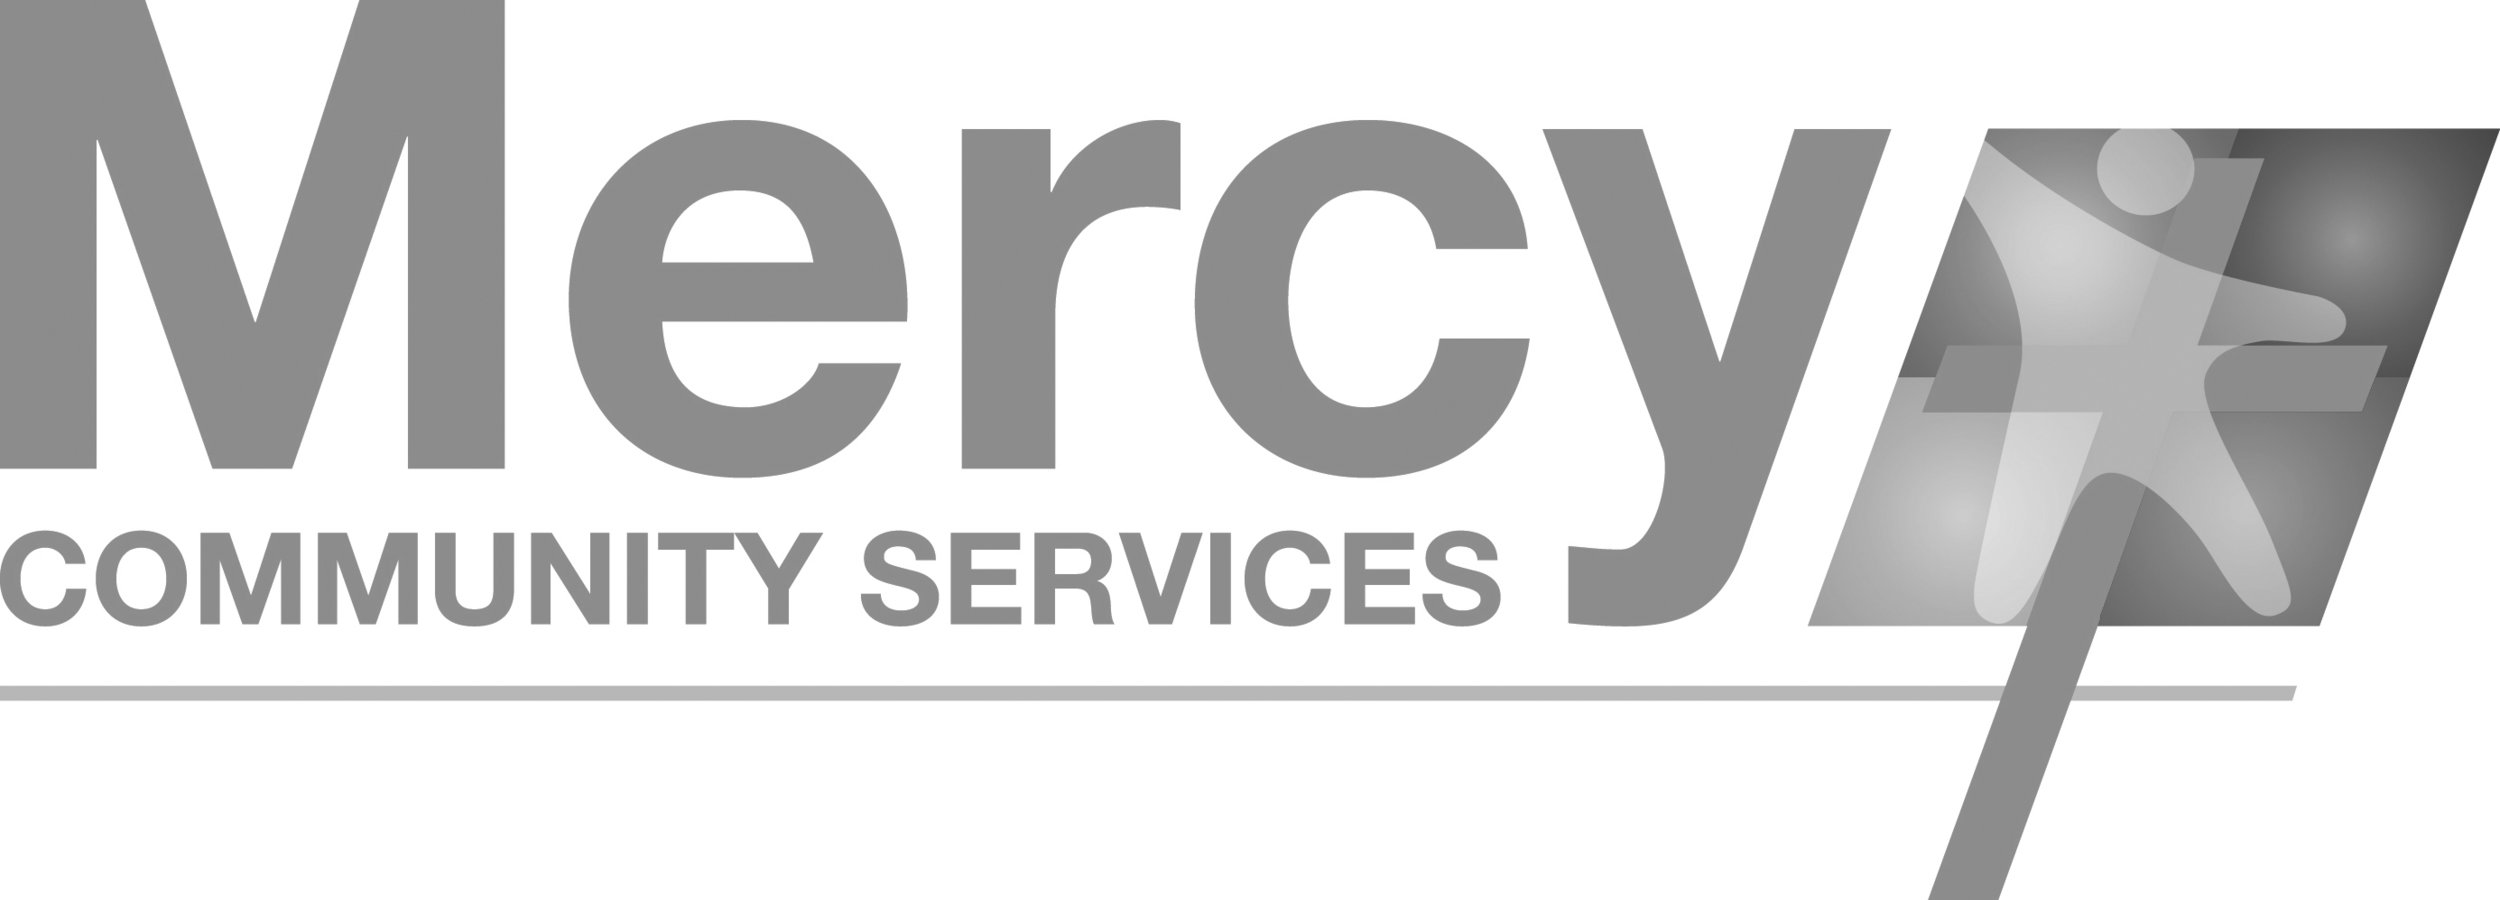 Mercy Community Services colour logo.jpg